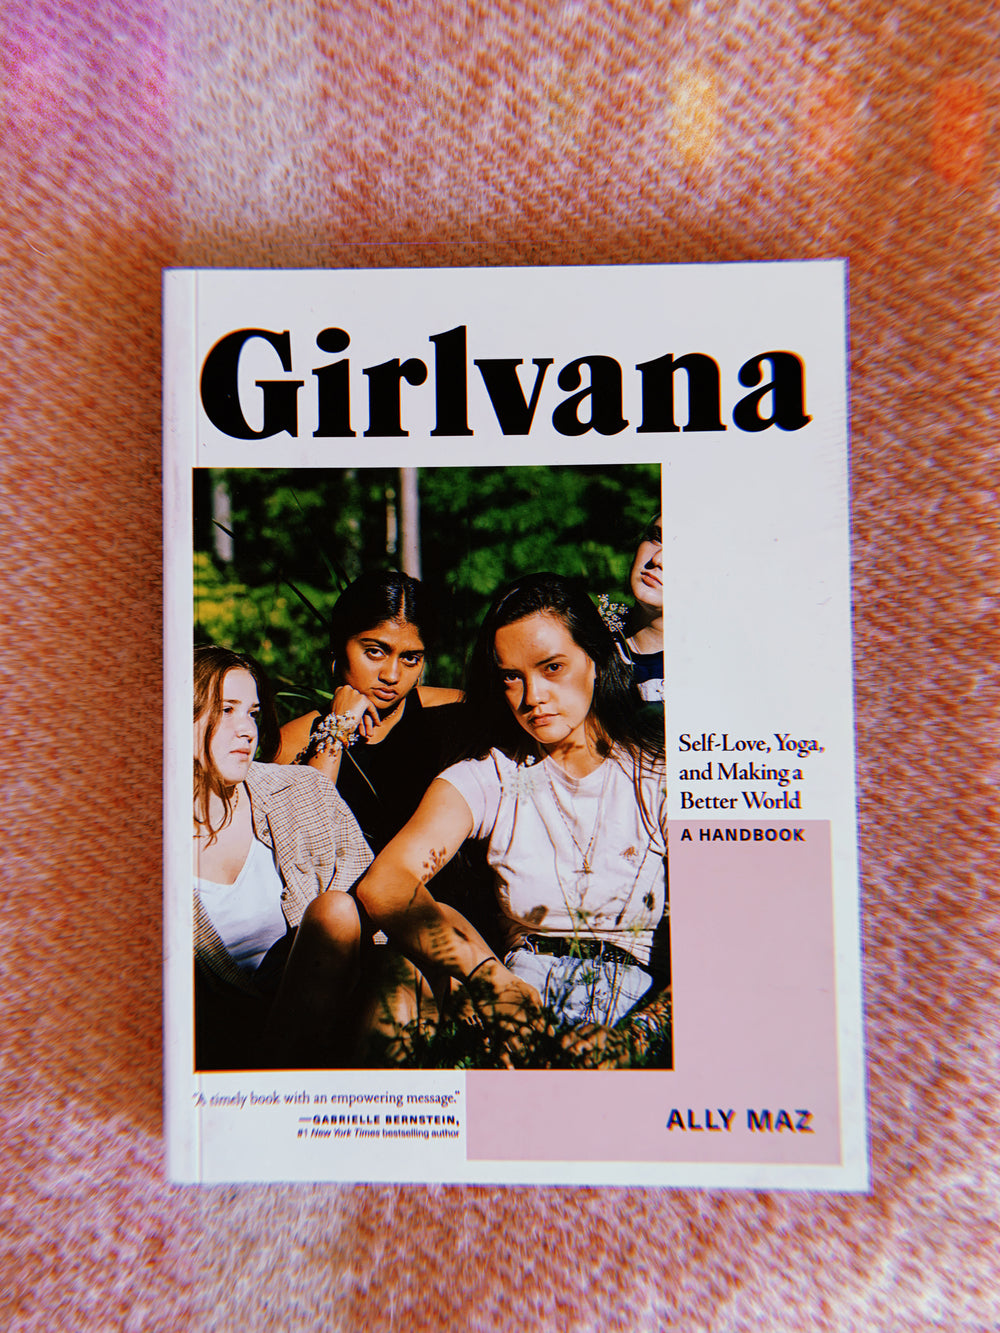  Twentyseven Toronto - Ally Maz - Girlvana: Self-Love, Yoga, and Making a Better World: A Handbook